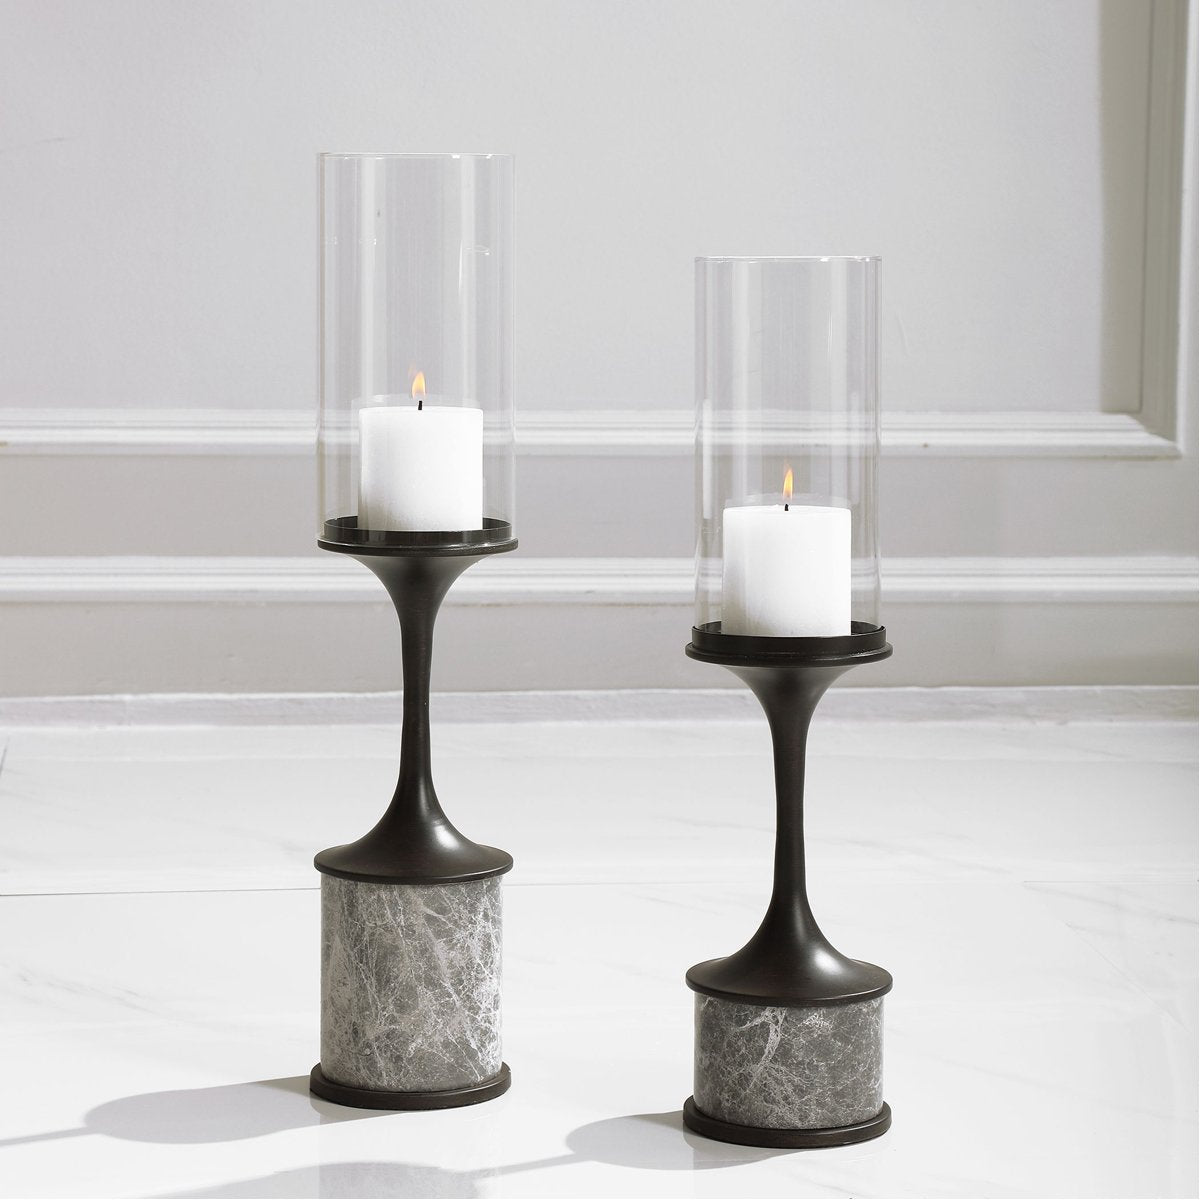 Uttermost Deane Marble Candleholders, 2-Piece Set